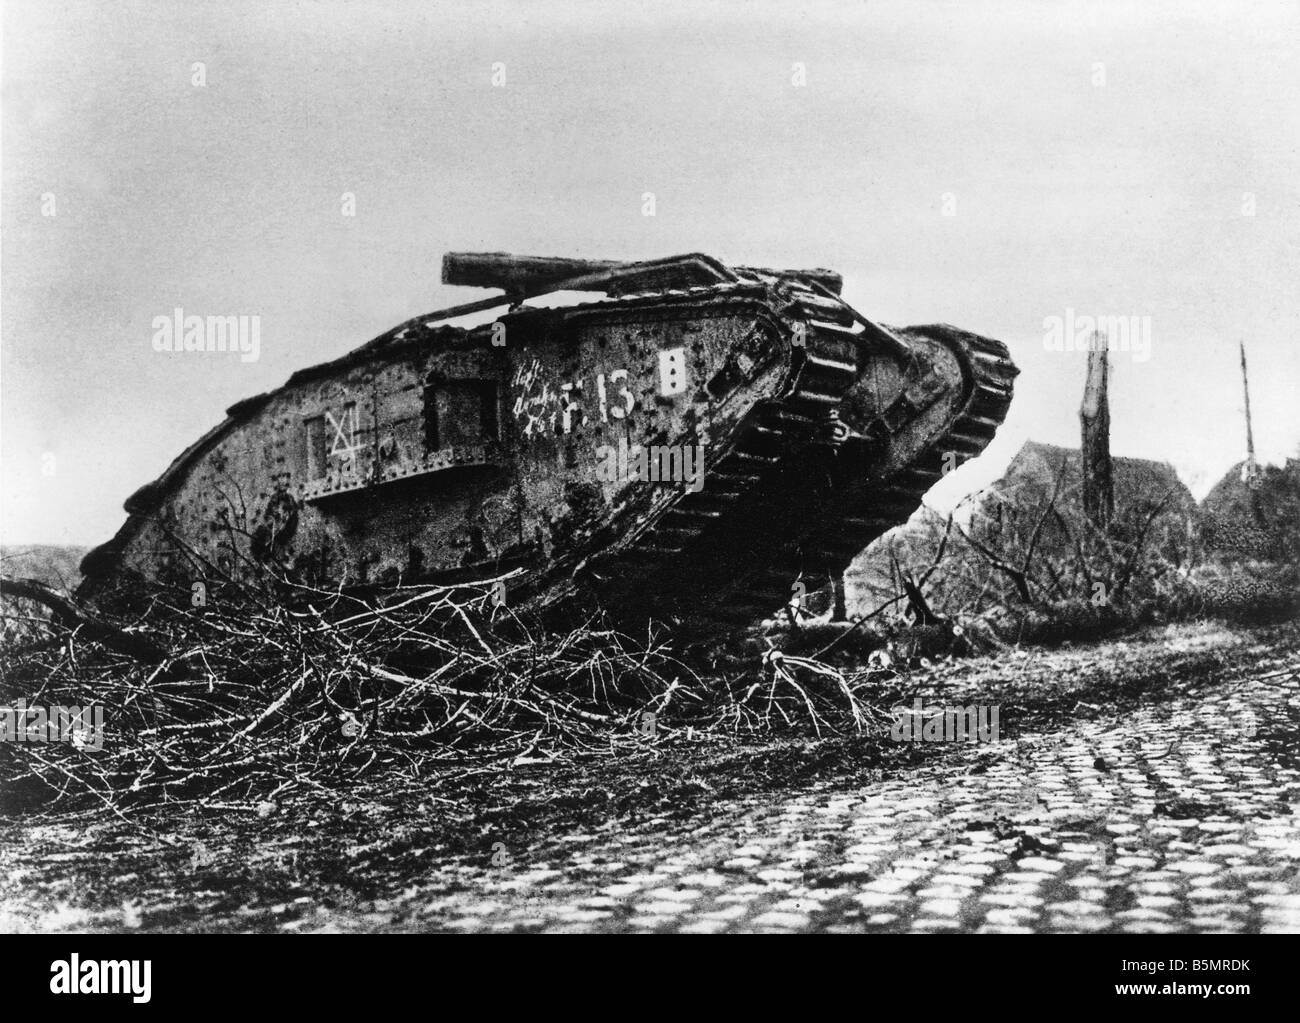 9 1917 11 20 A2 1 E Tank battle at Cambrai English tank World War One Western Front Tank battle at Cambrai 20 29 November 1917 A Stock Photo